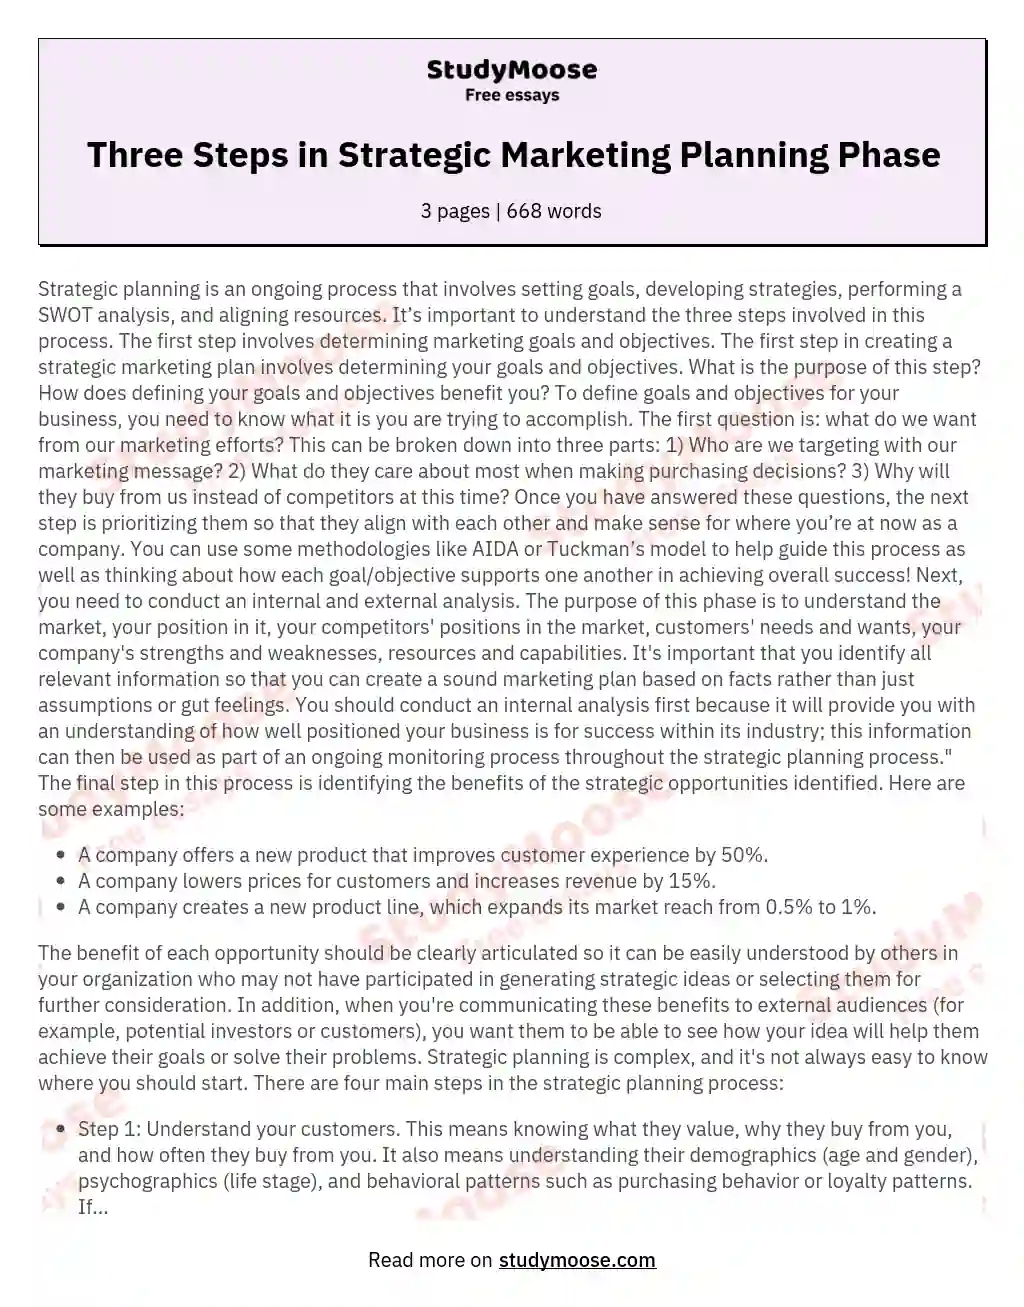 Three Steps in Strategic Marketing Planning Phase essay